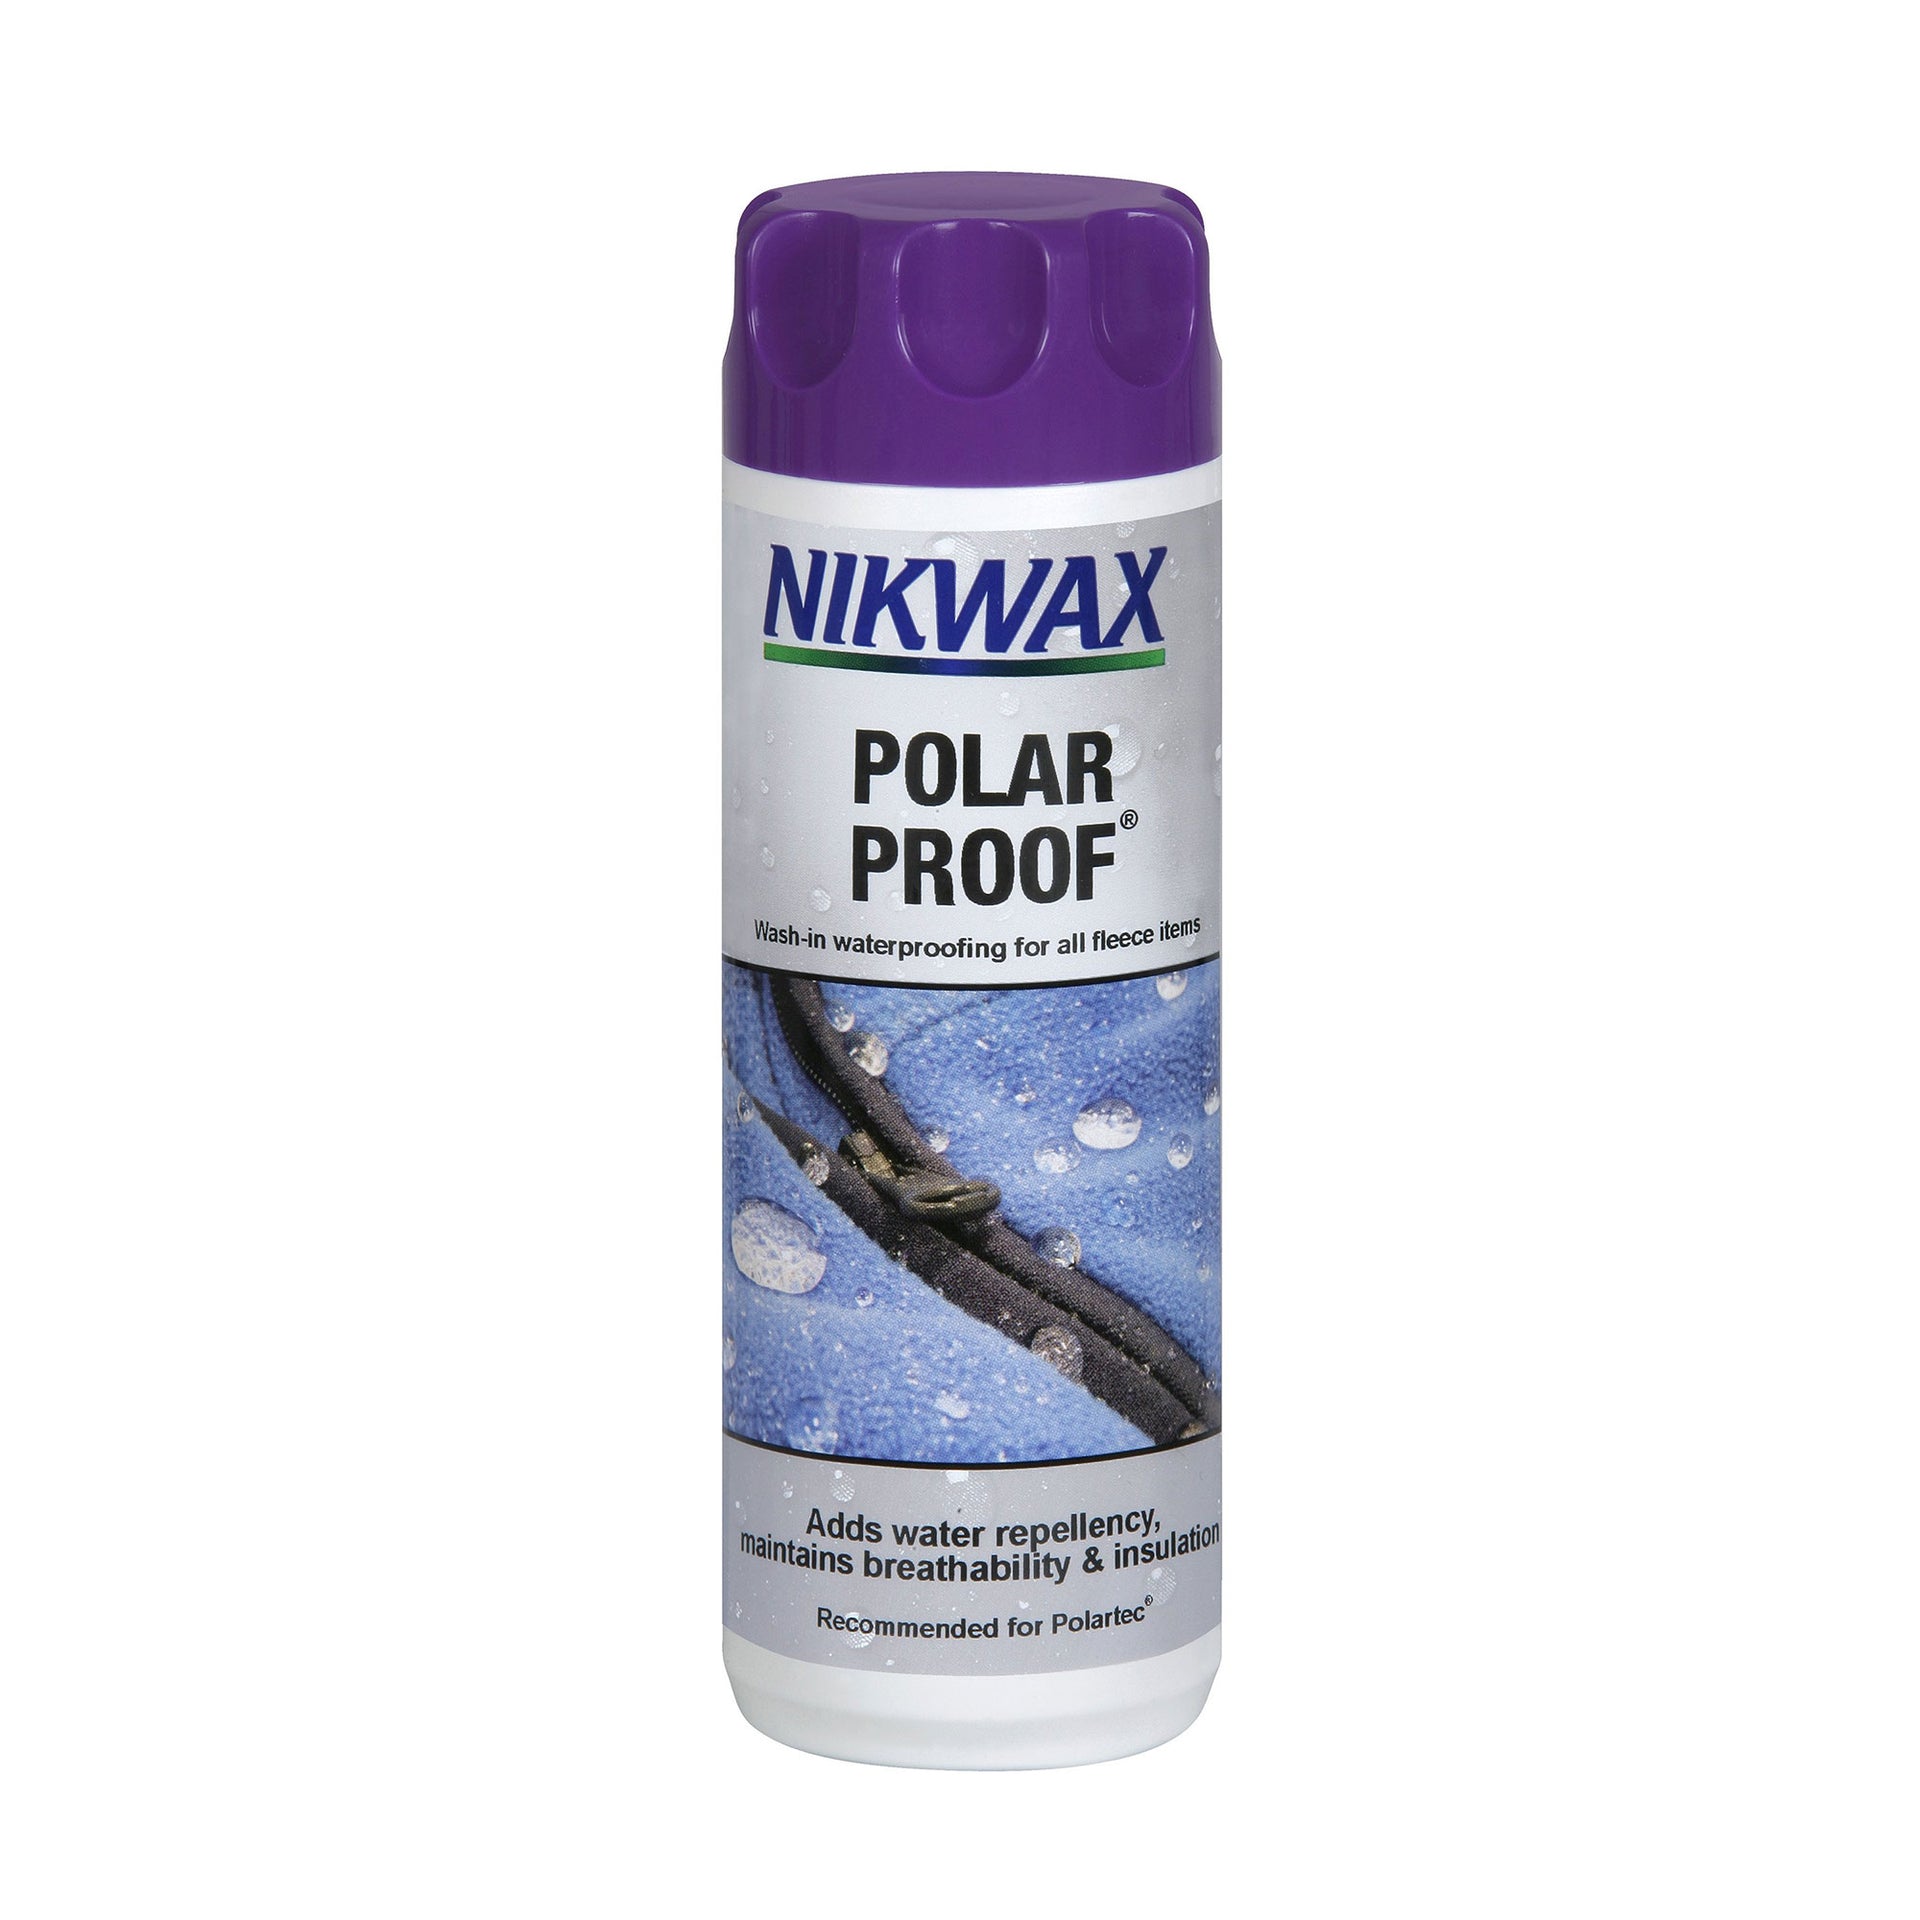 Nikwax Polar Proof – AFTCO